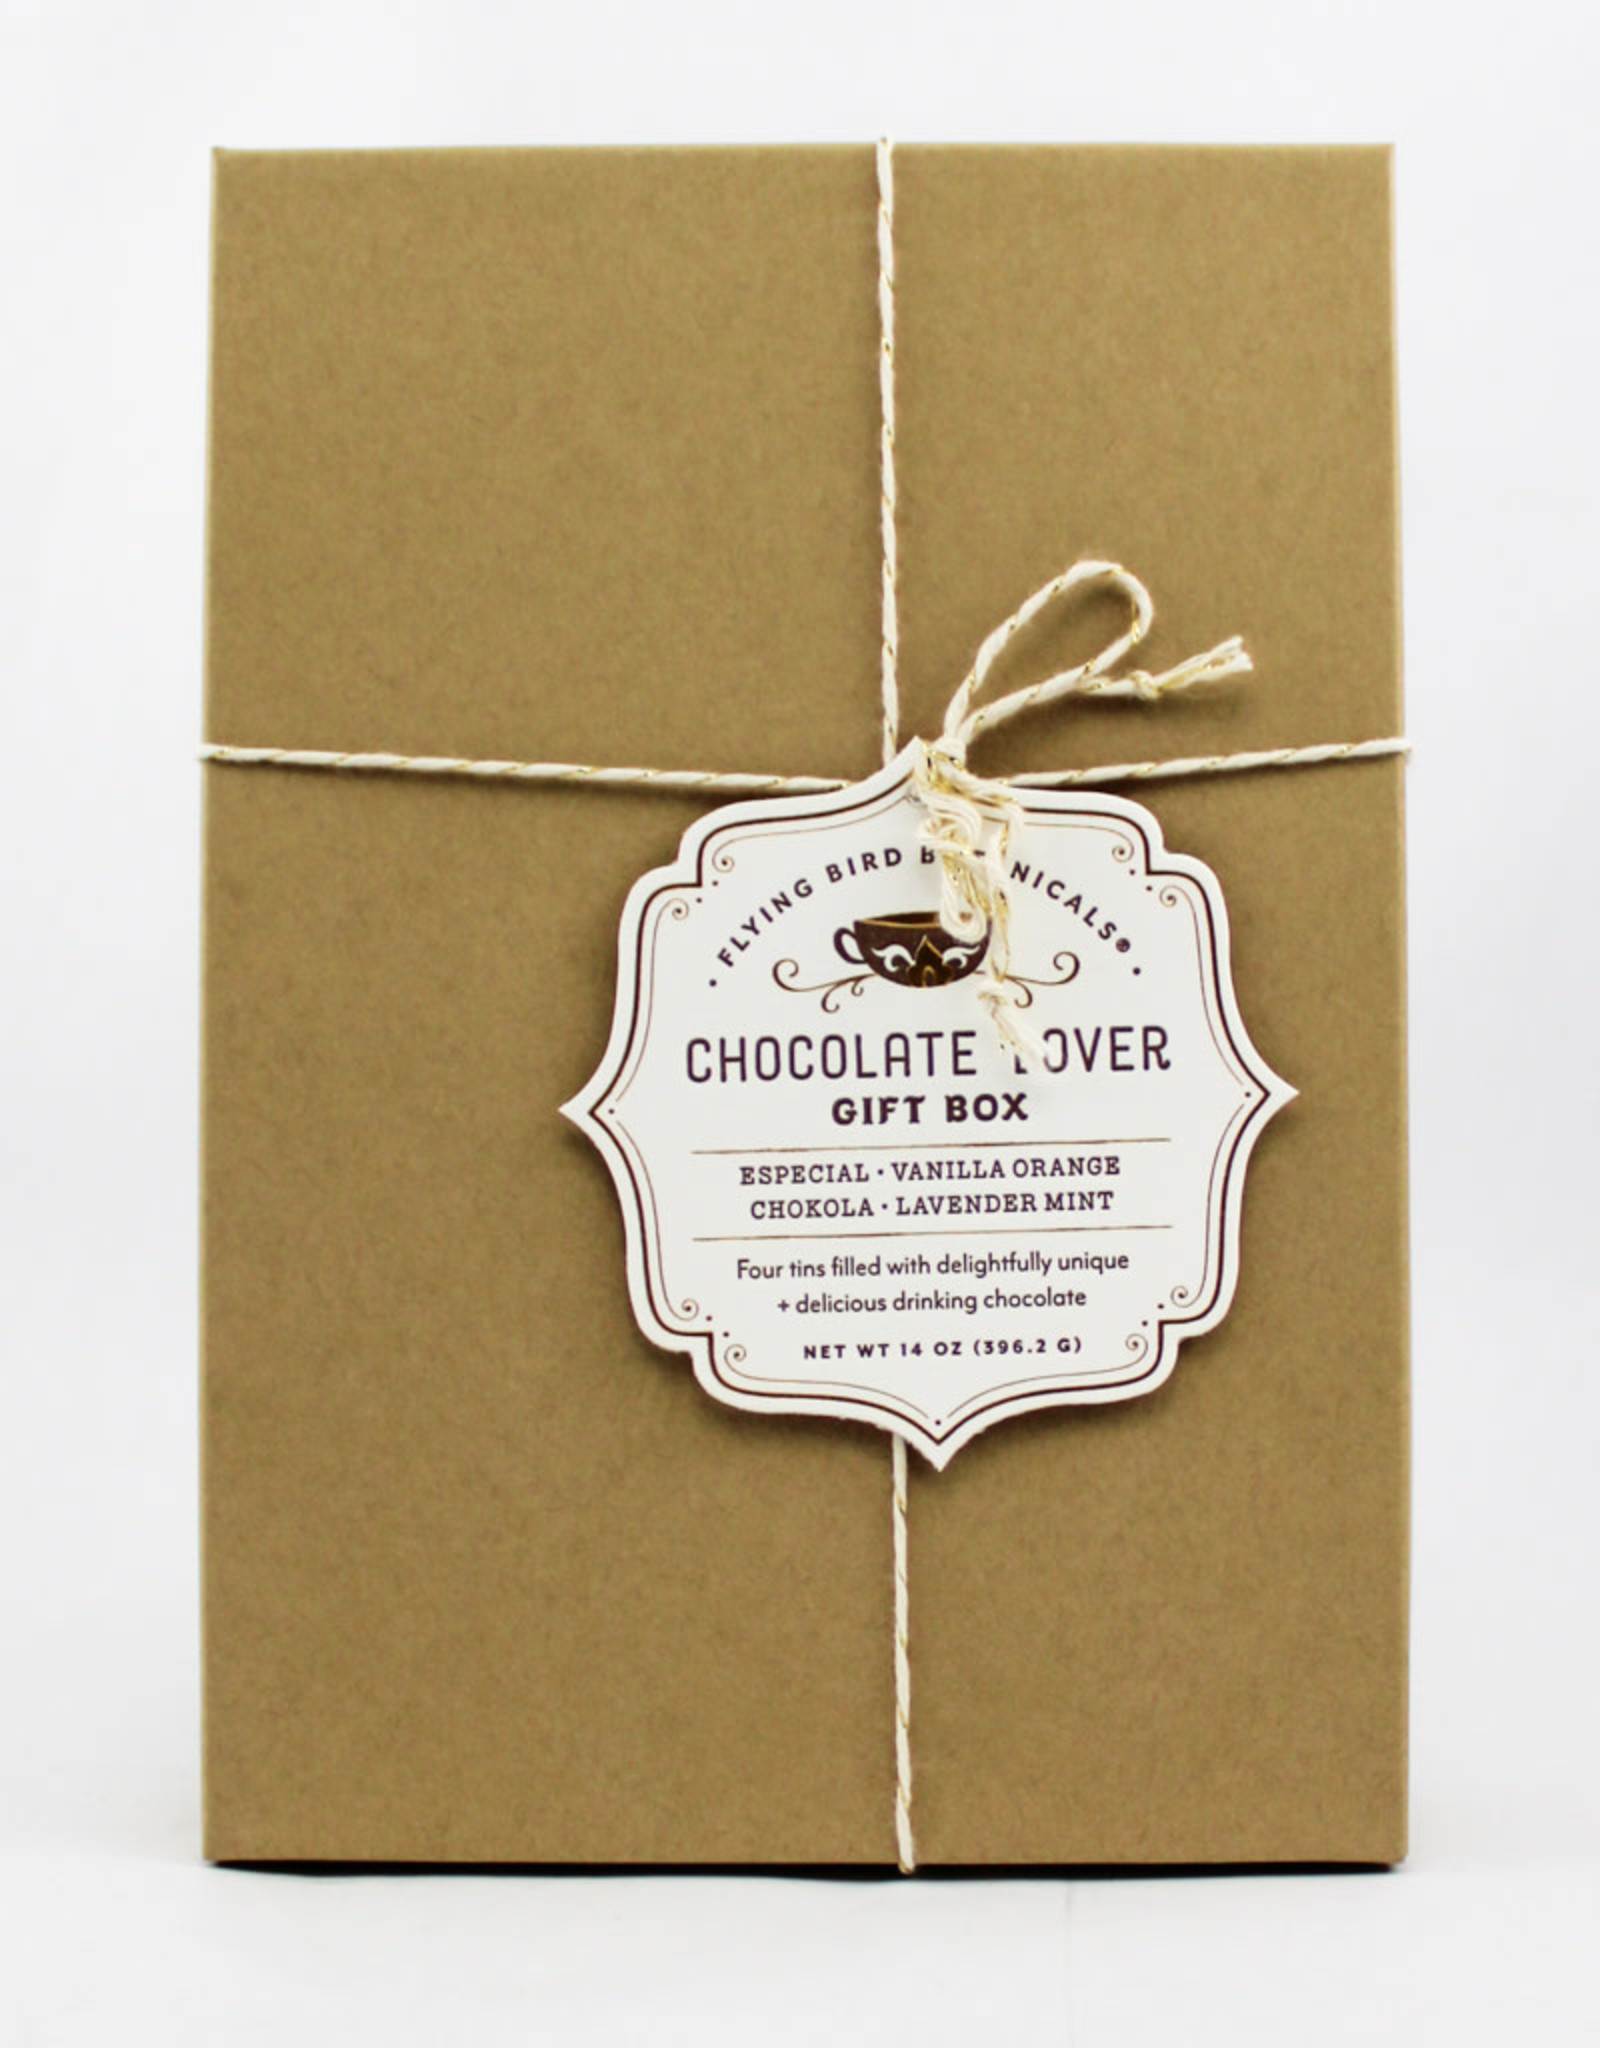 Flying Bird Botanicals Chocolate Lovers Gift Box